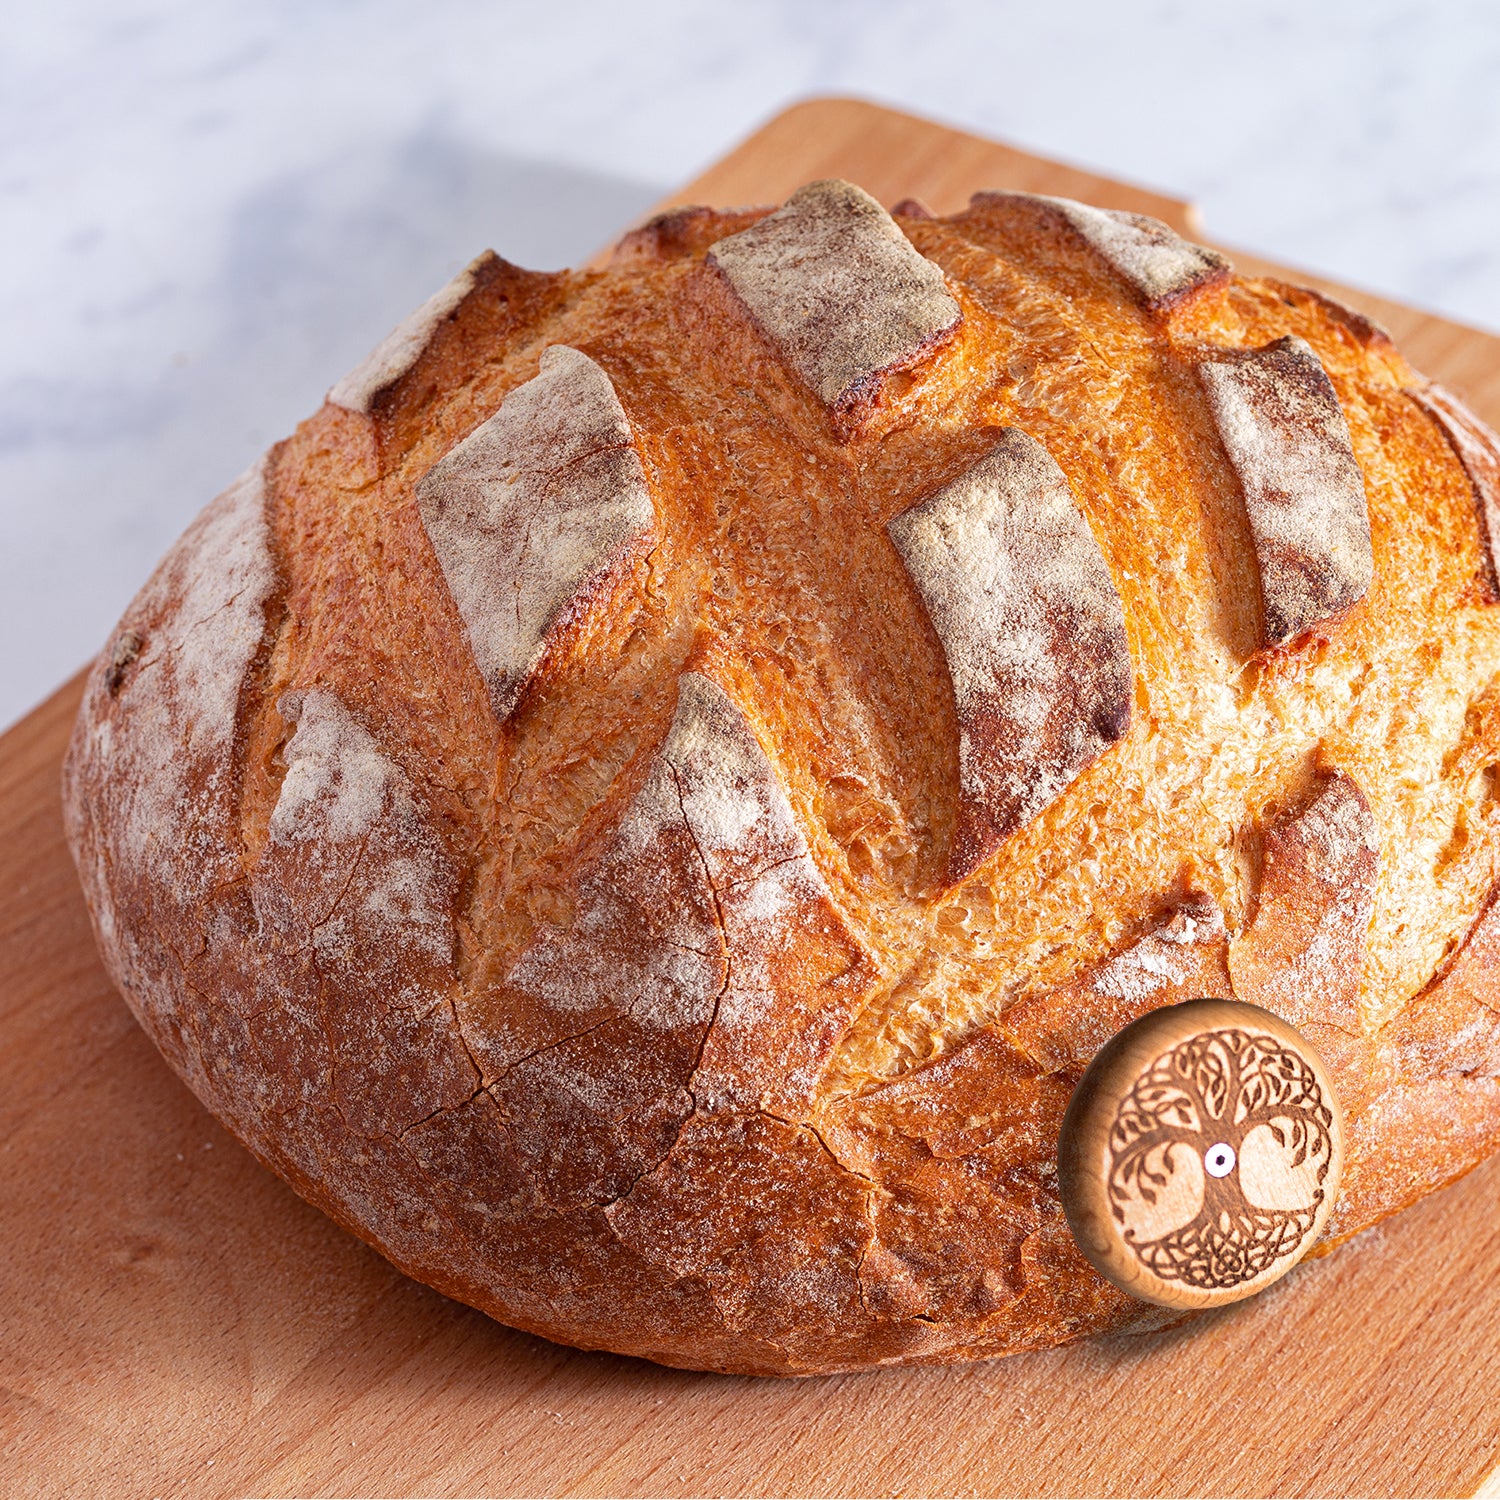 Bread Lame Dough Scoring Tool - Baking Gift for Homemade Sourdough Bread Bakers